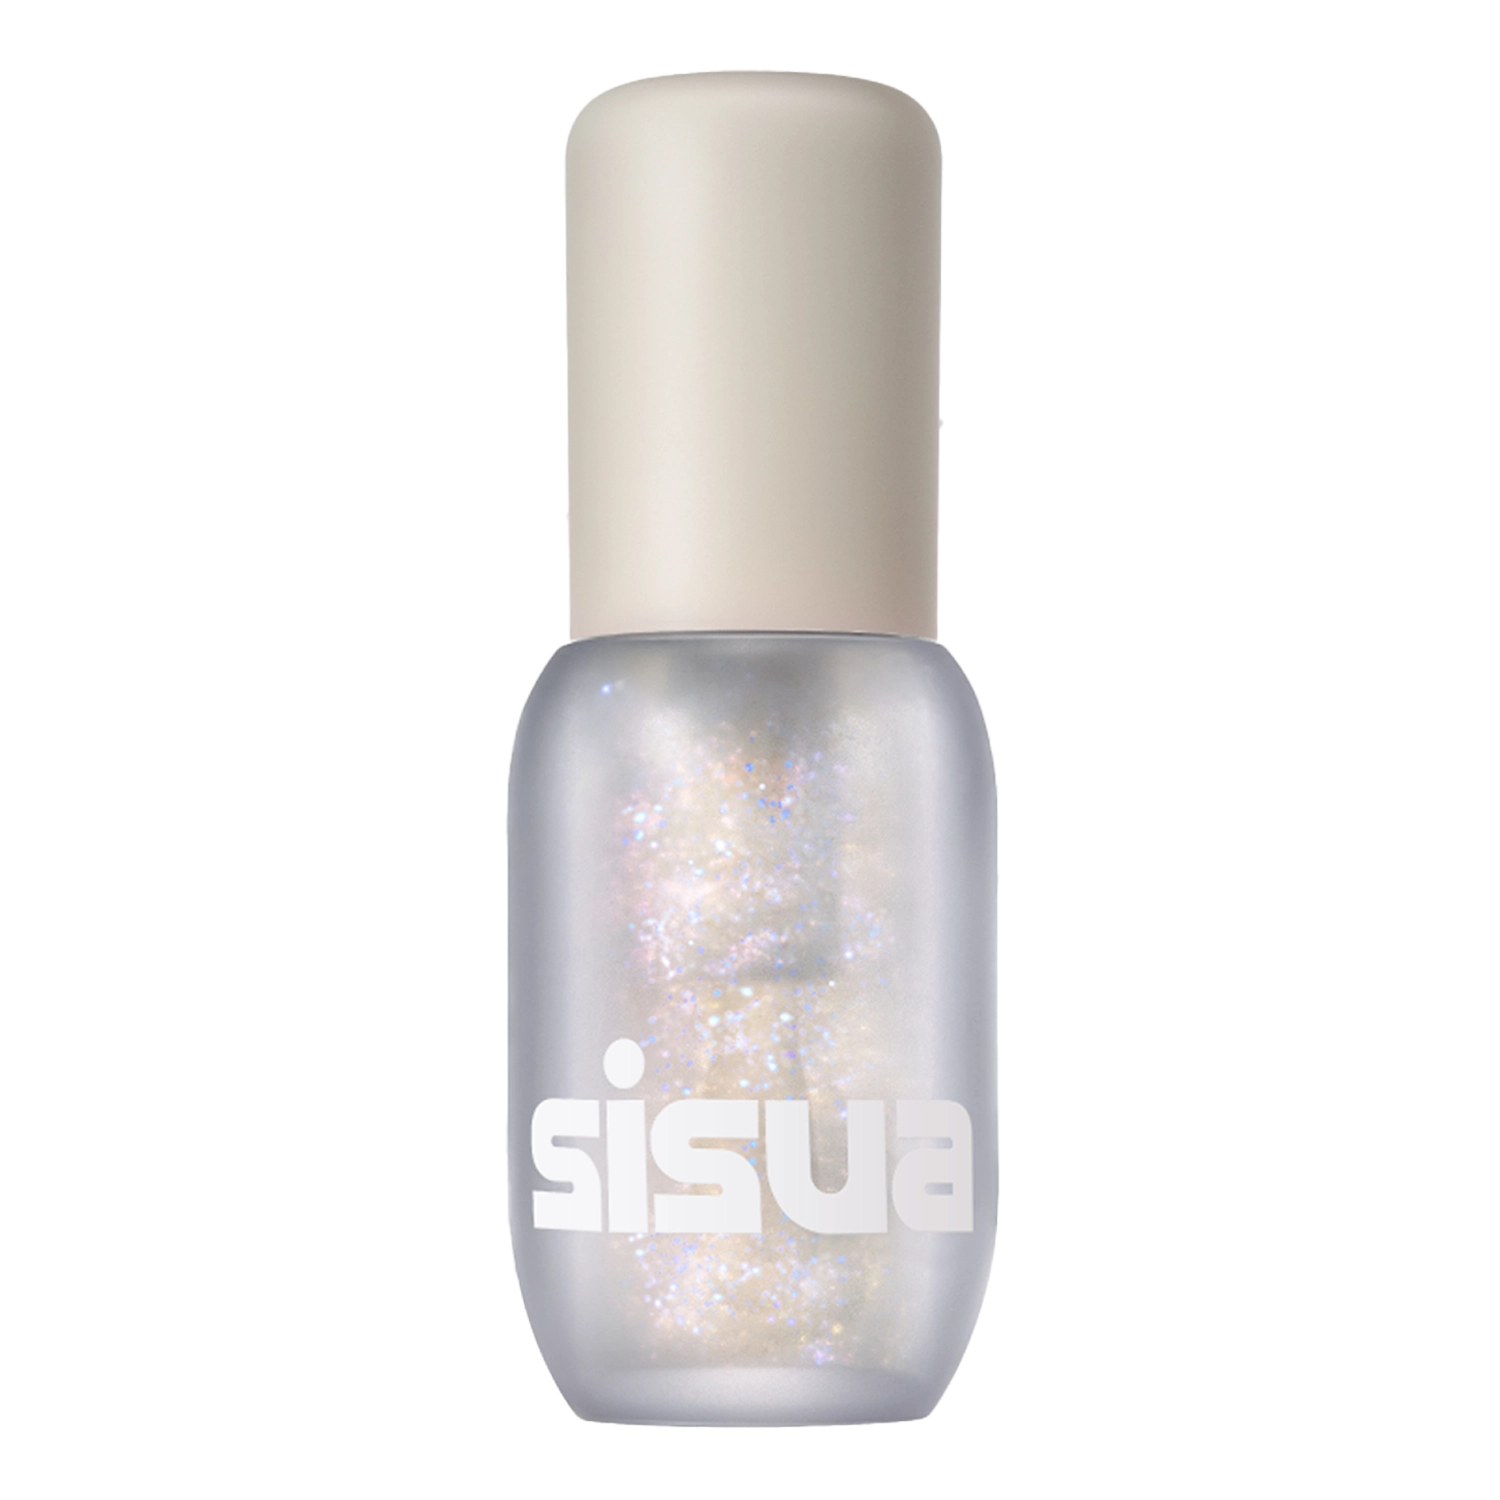 Unleashia - Sisua Popcorn Syrup Lip Plumper - Зволожувальний блиск для губ - No.100 Unicorn Salt - 3,8g